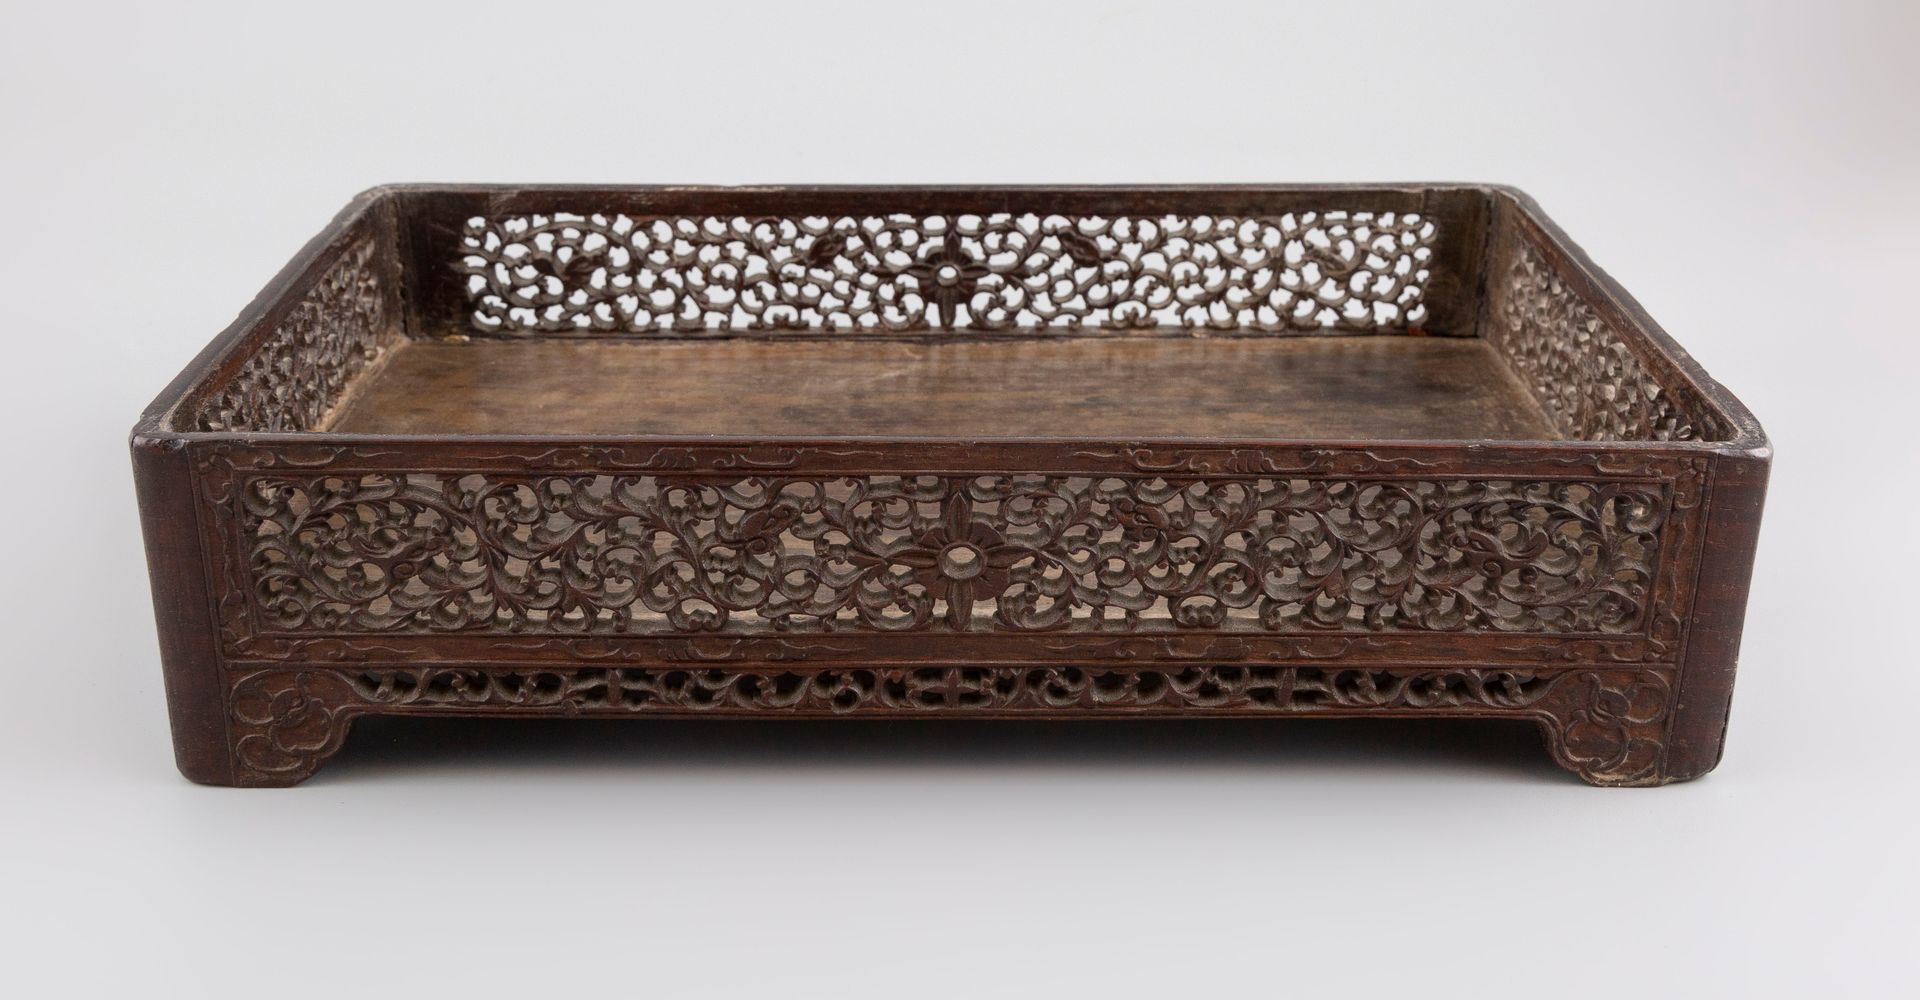 Null China. Wooden tray with a fine openwork design. Around 1920. 33x20cm.